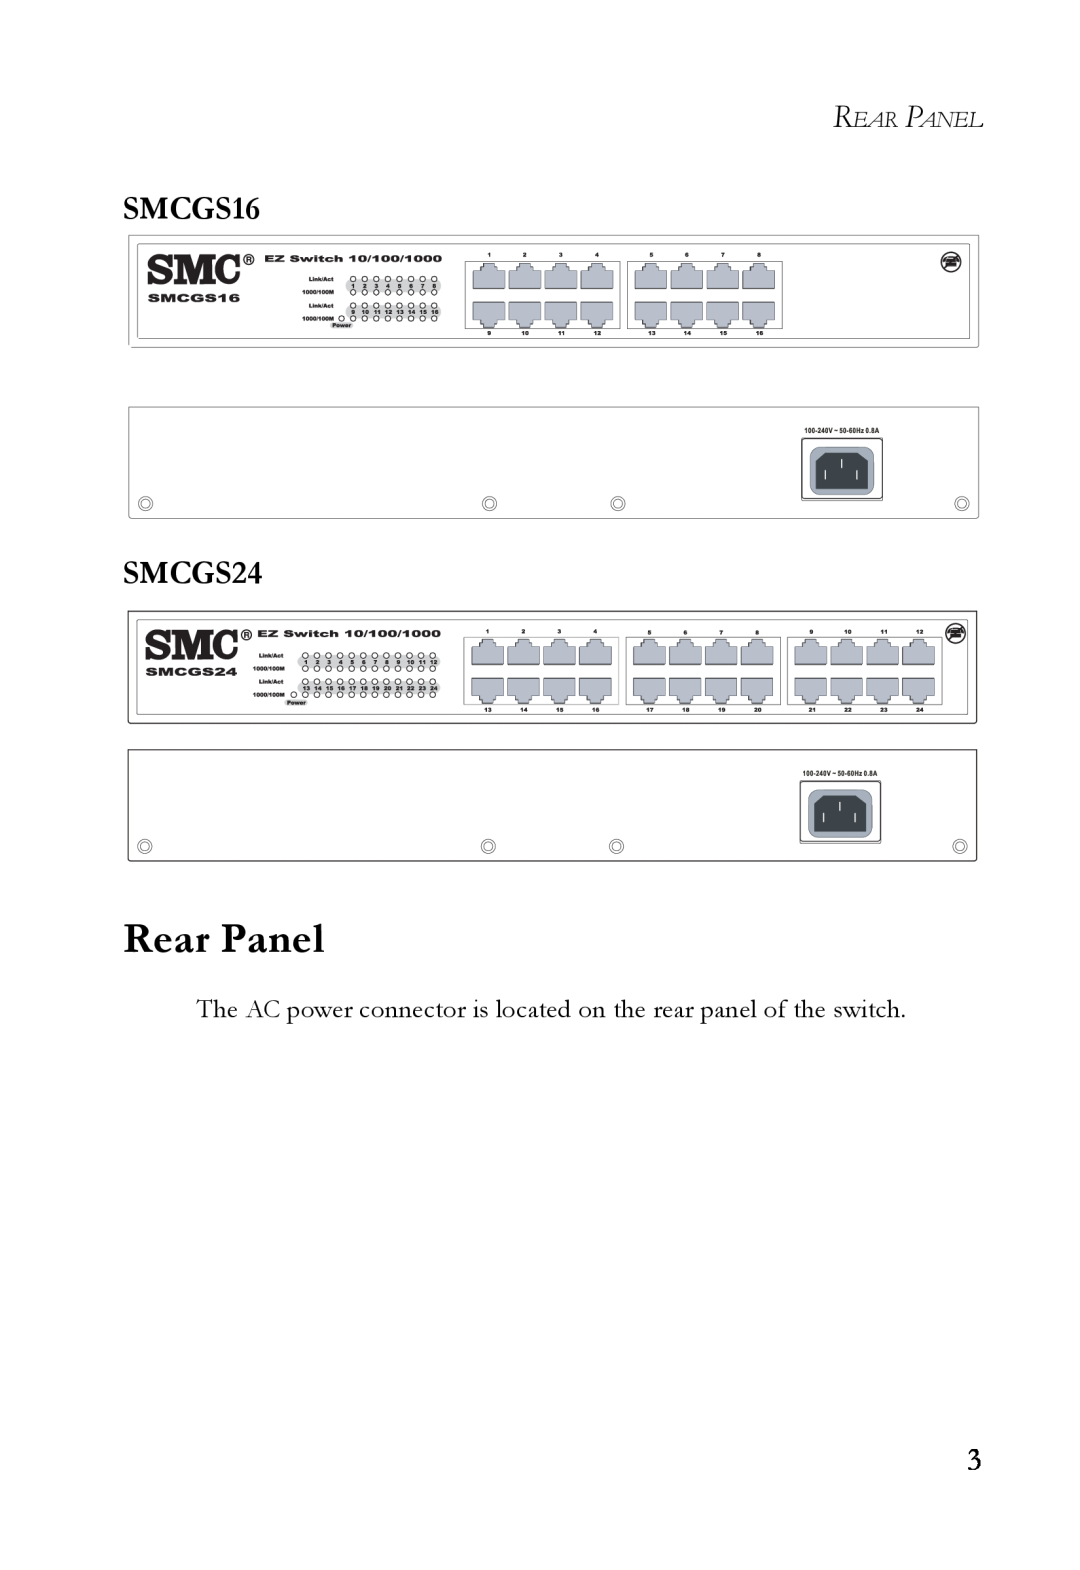 SMC Networks manual Rear Panel, SMCGS16 SMCGS24 